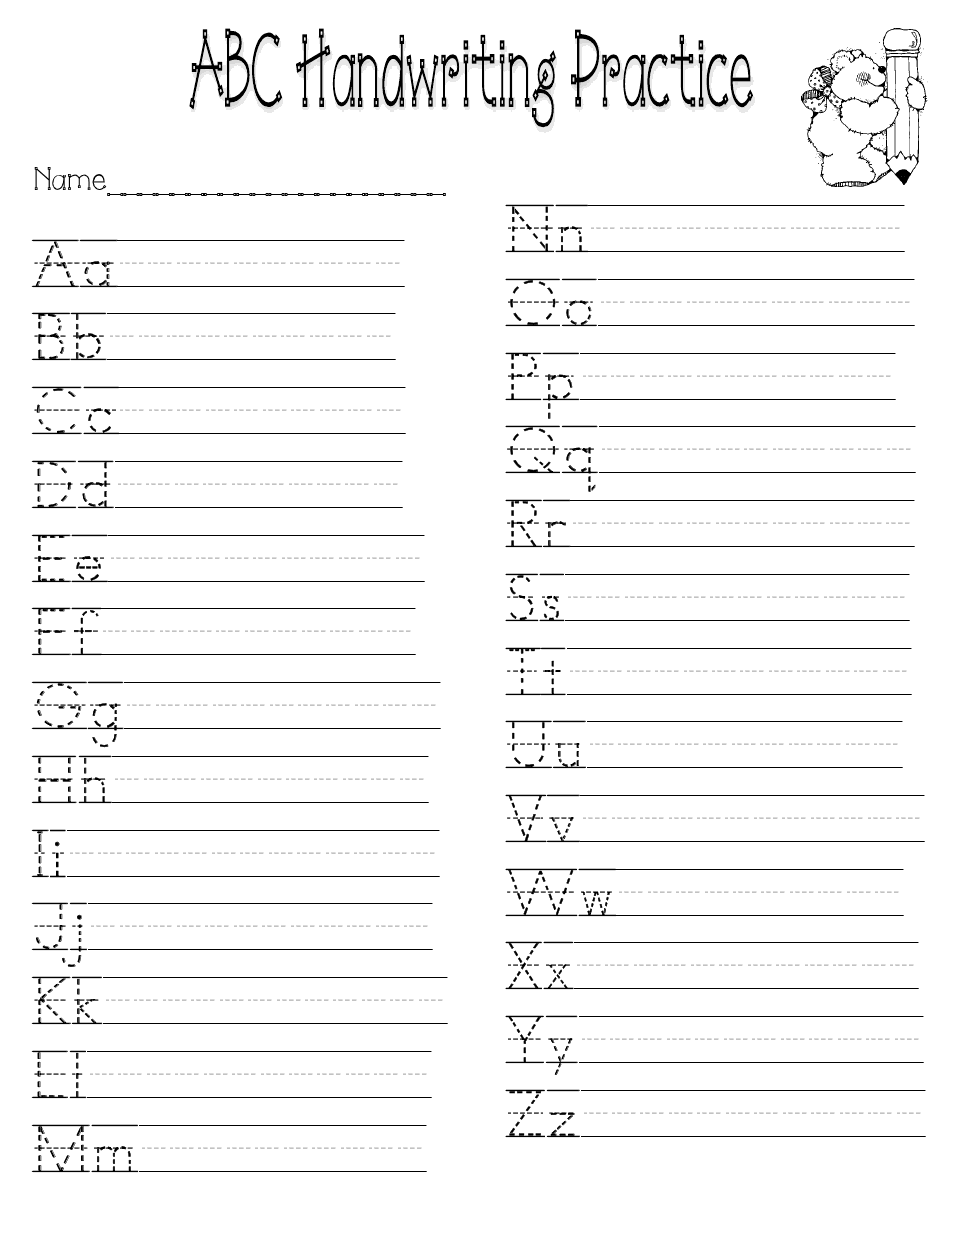 Handwriting Practice pdf Google Drive Kids Handwriting Practice Alphabet Writing Practice Handwriting Practice Worksheets